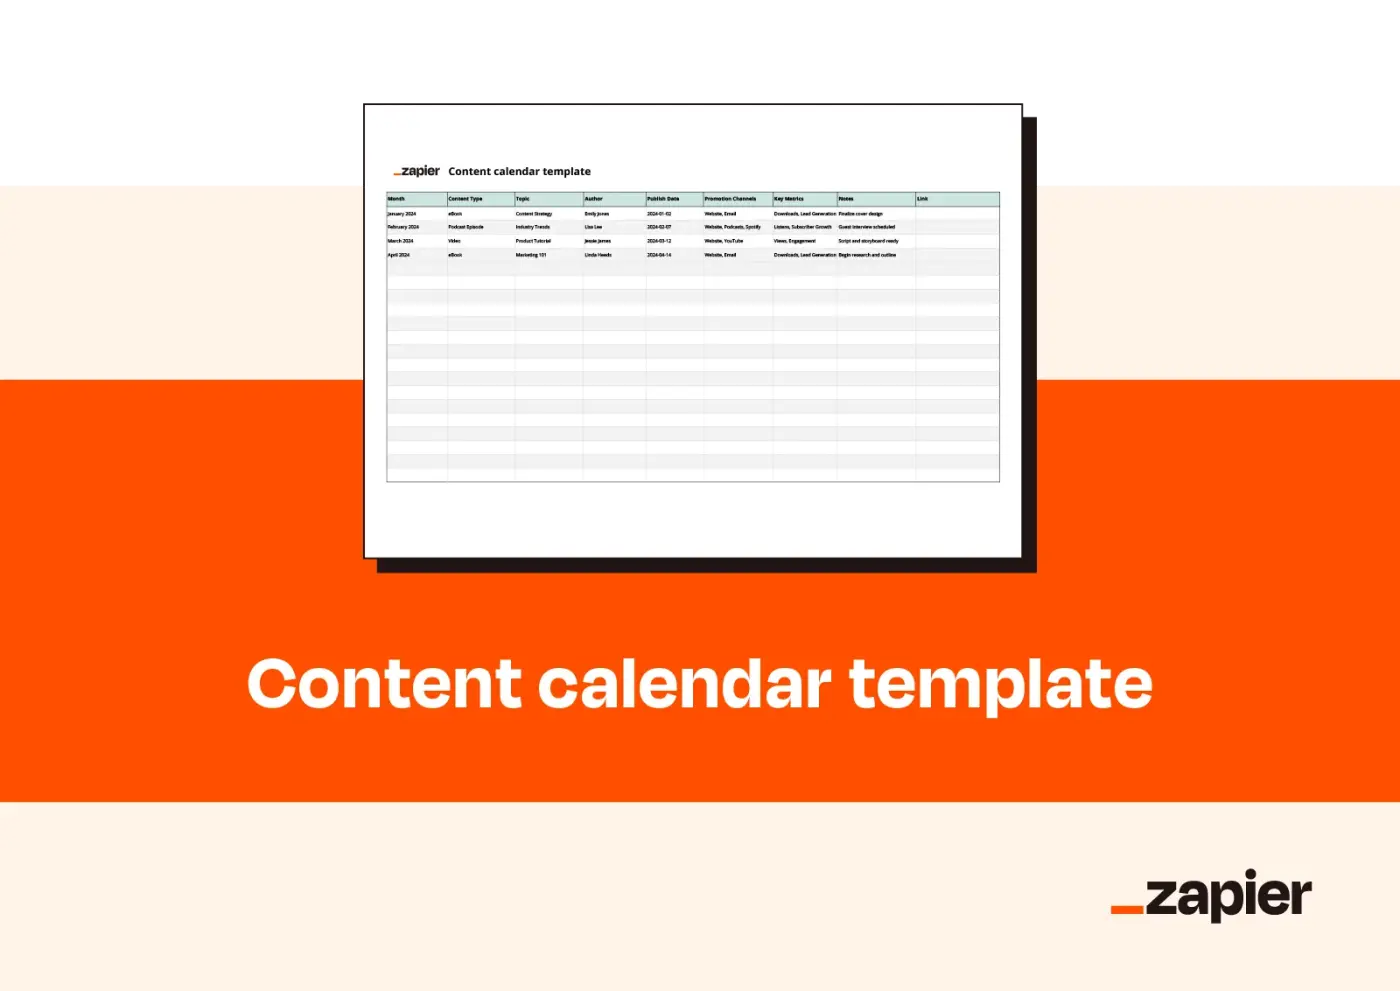 Mockup showcasing Zapier's content calendar template